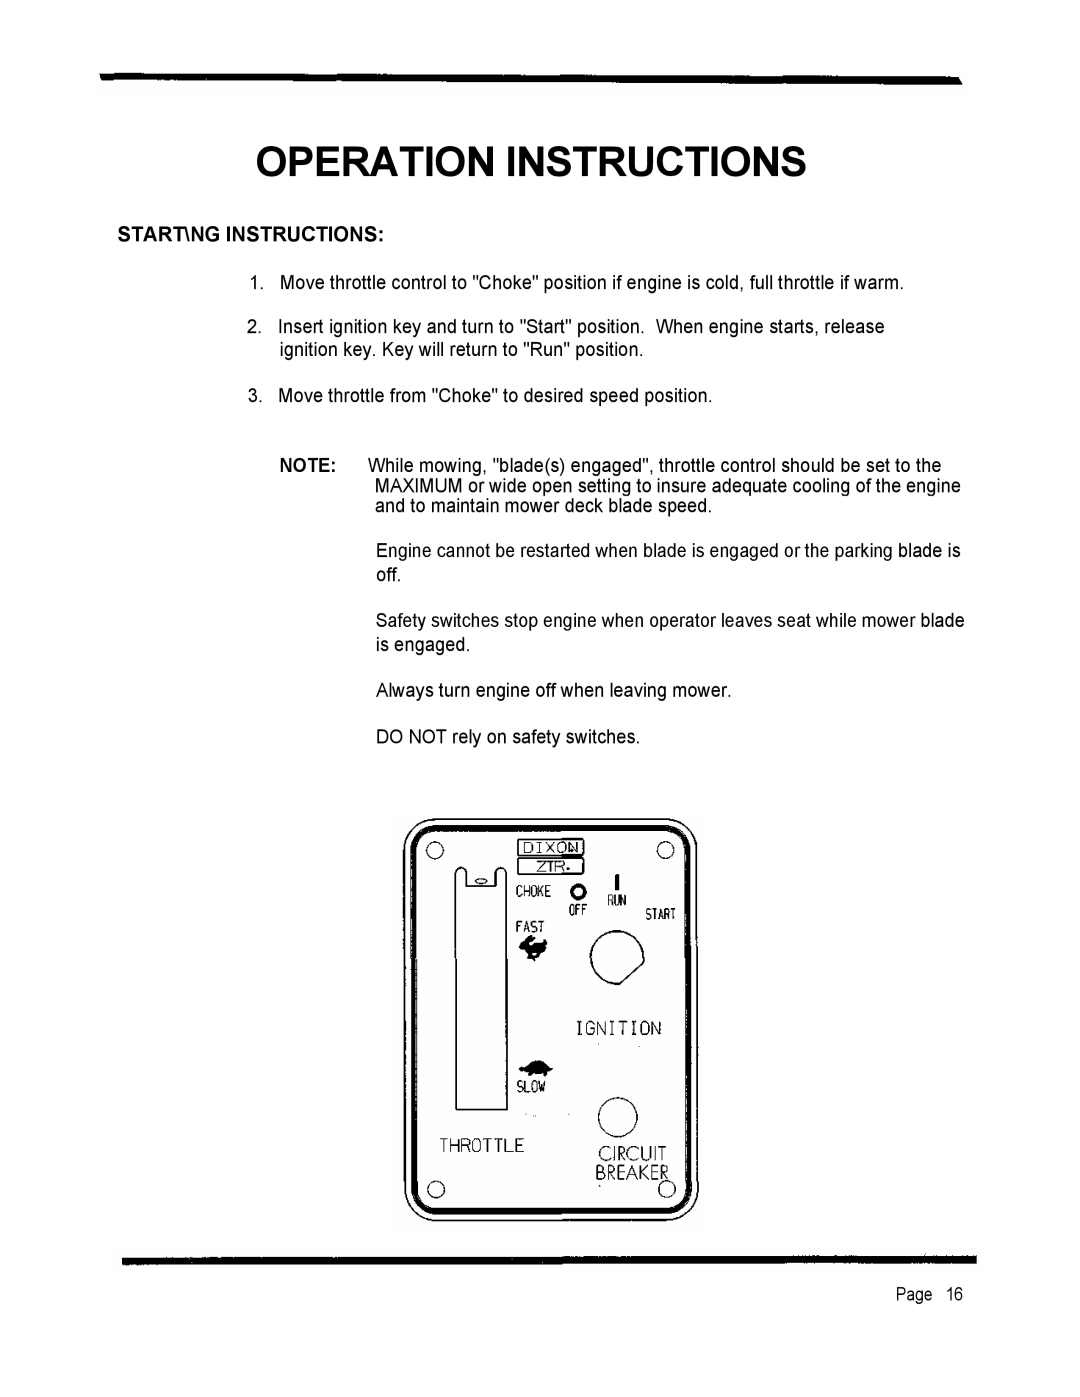 Dixon 2301 manual Operation Instructions, Start\Ng Instructions 